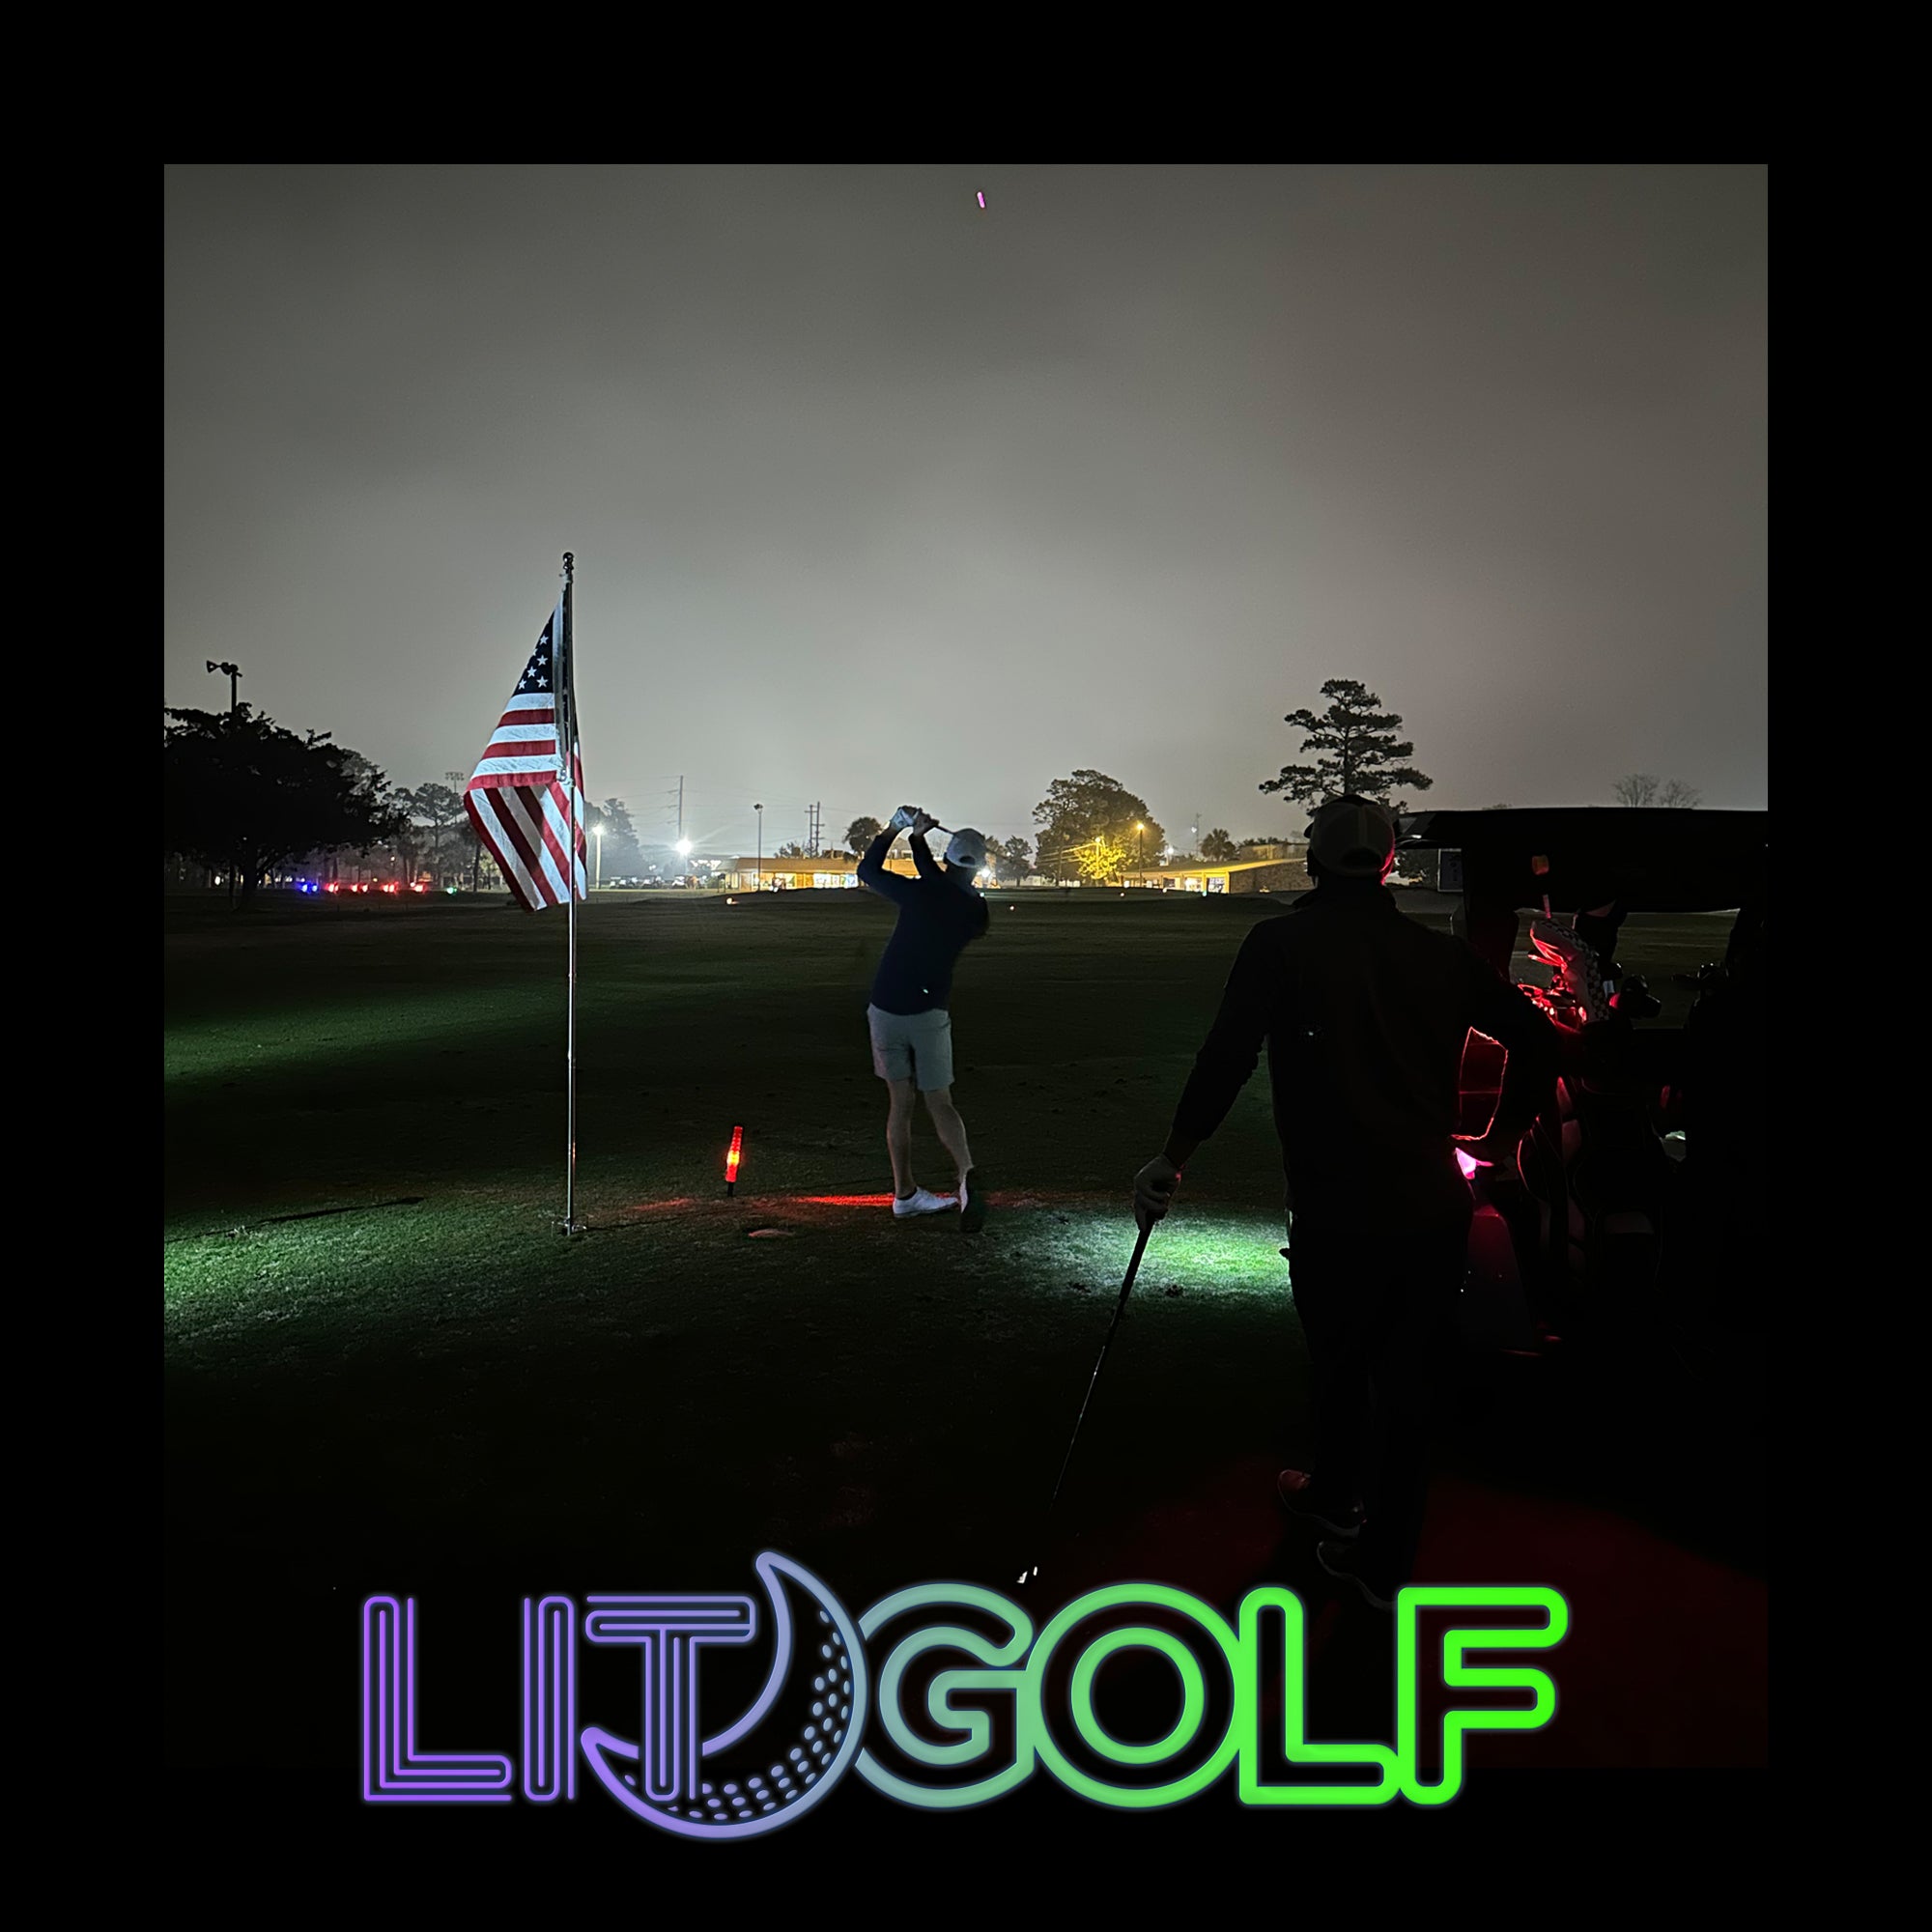 Play Night Golf in Myrtle Beach